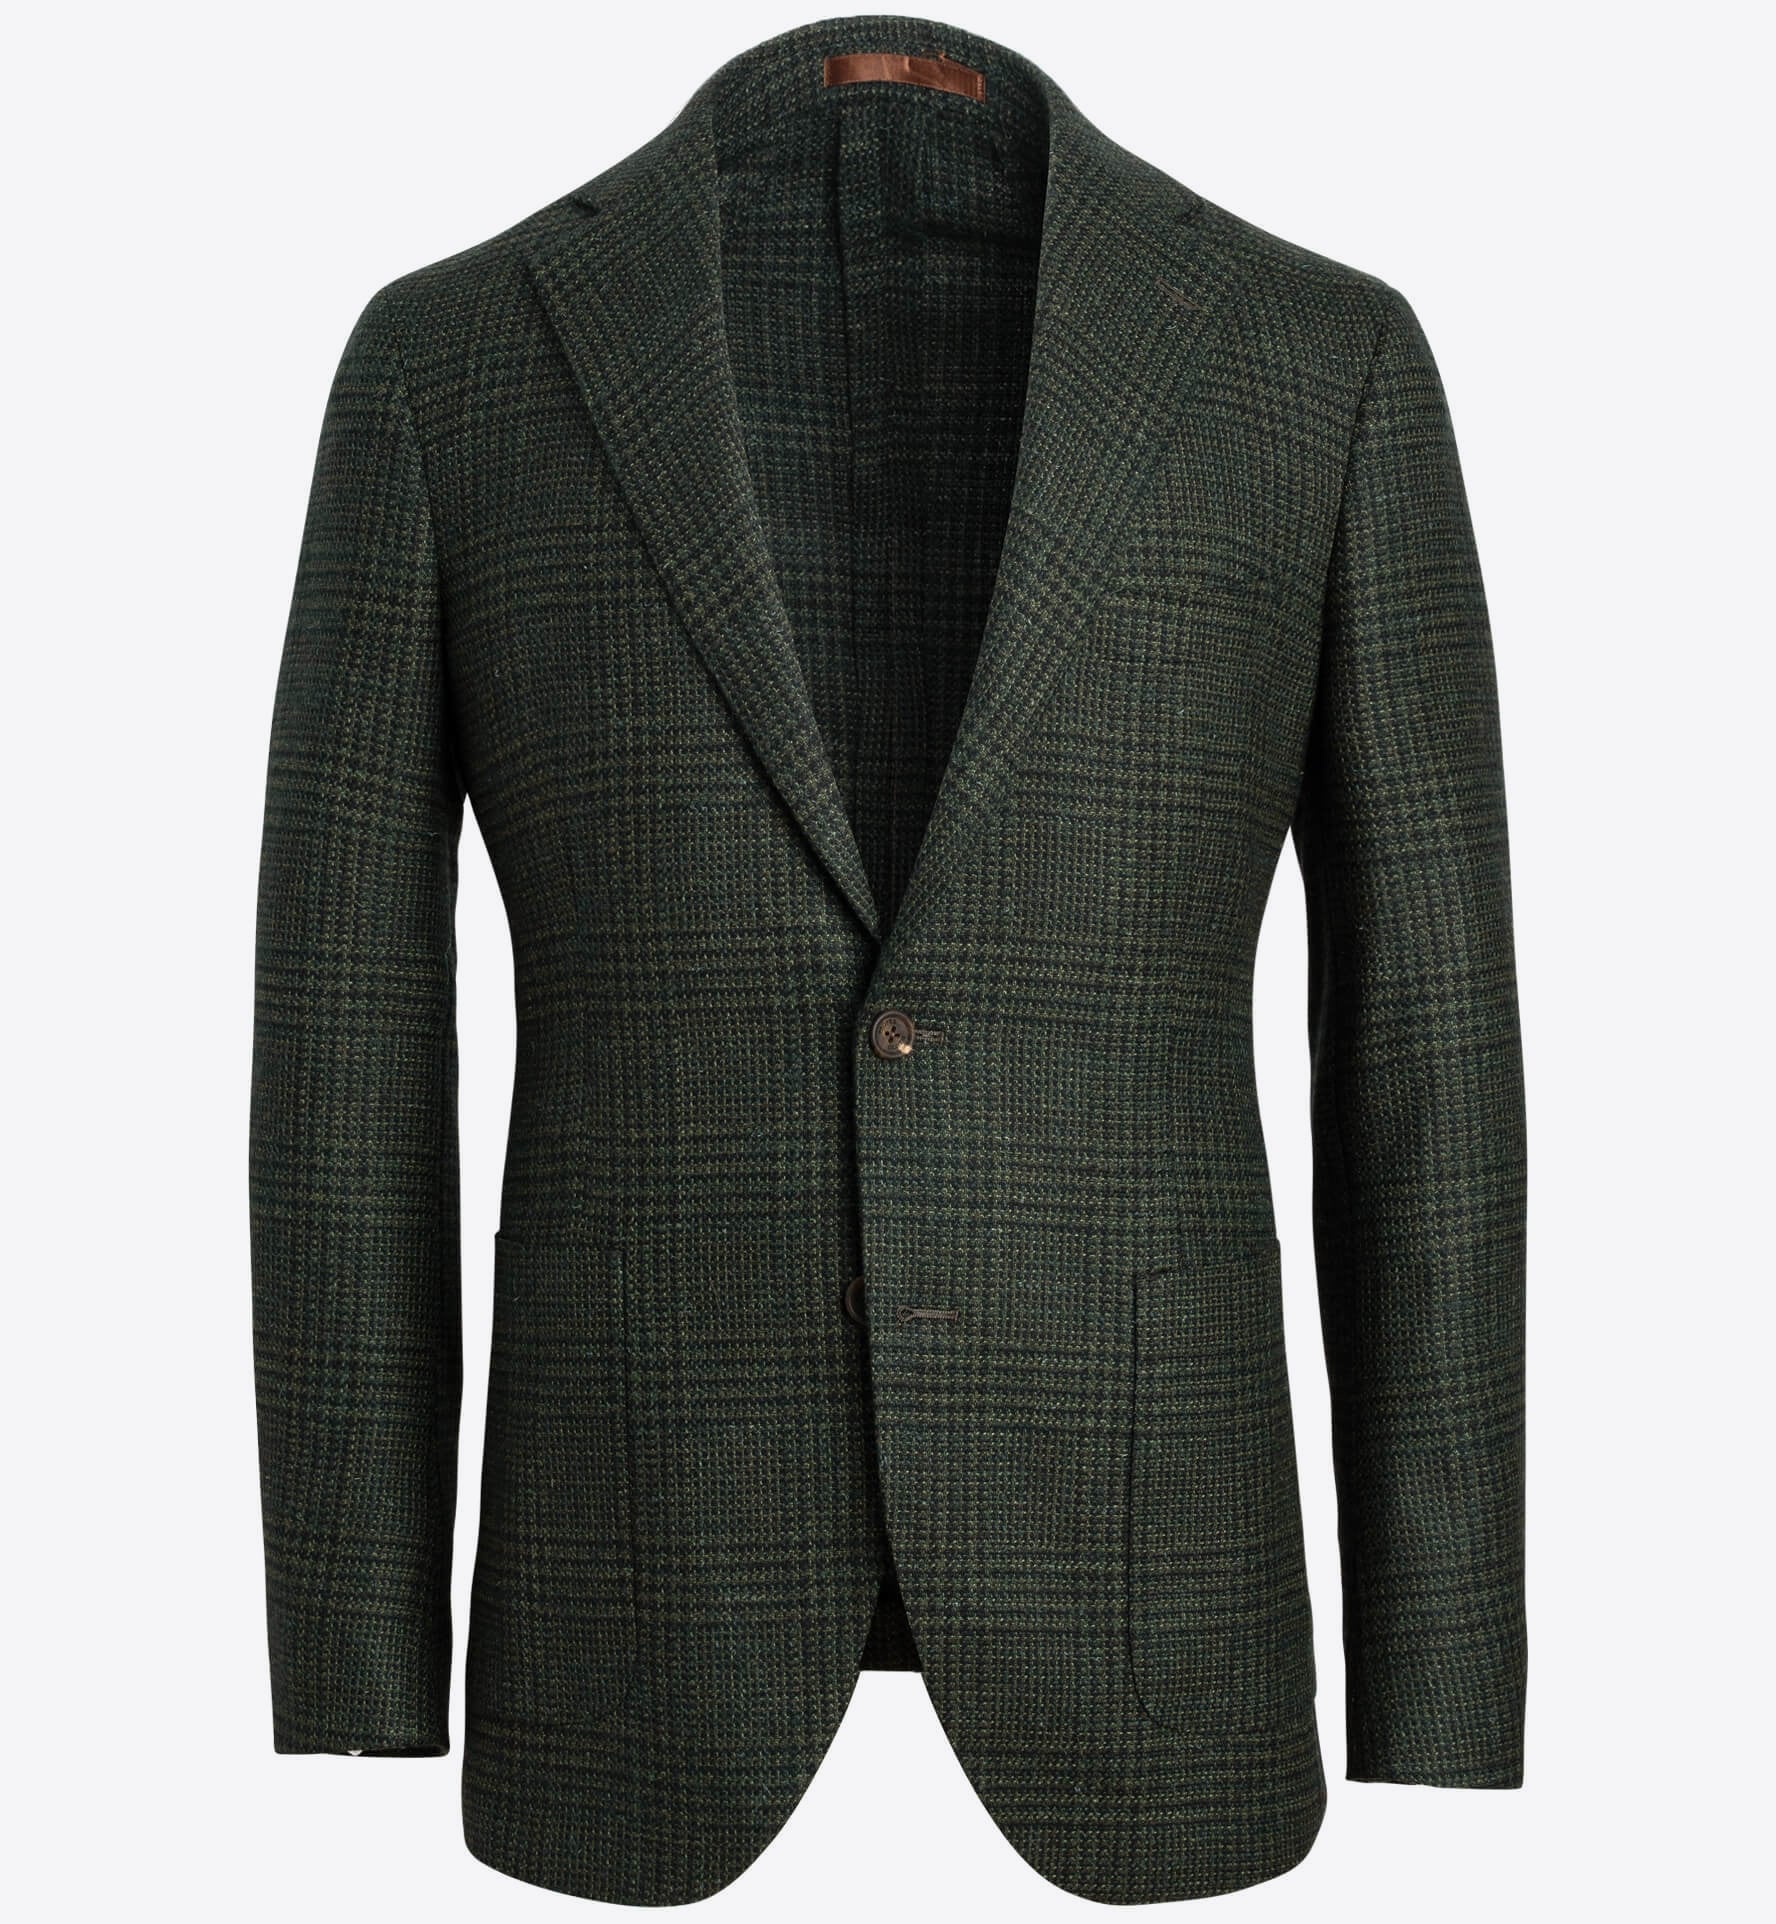 Bedford Pine Glen Plaid Wool and Alpaca Jacket - Custom Fit Tailored